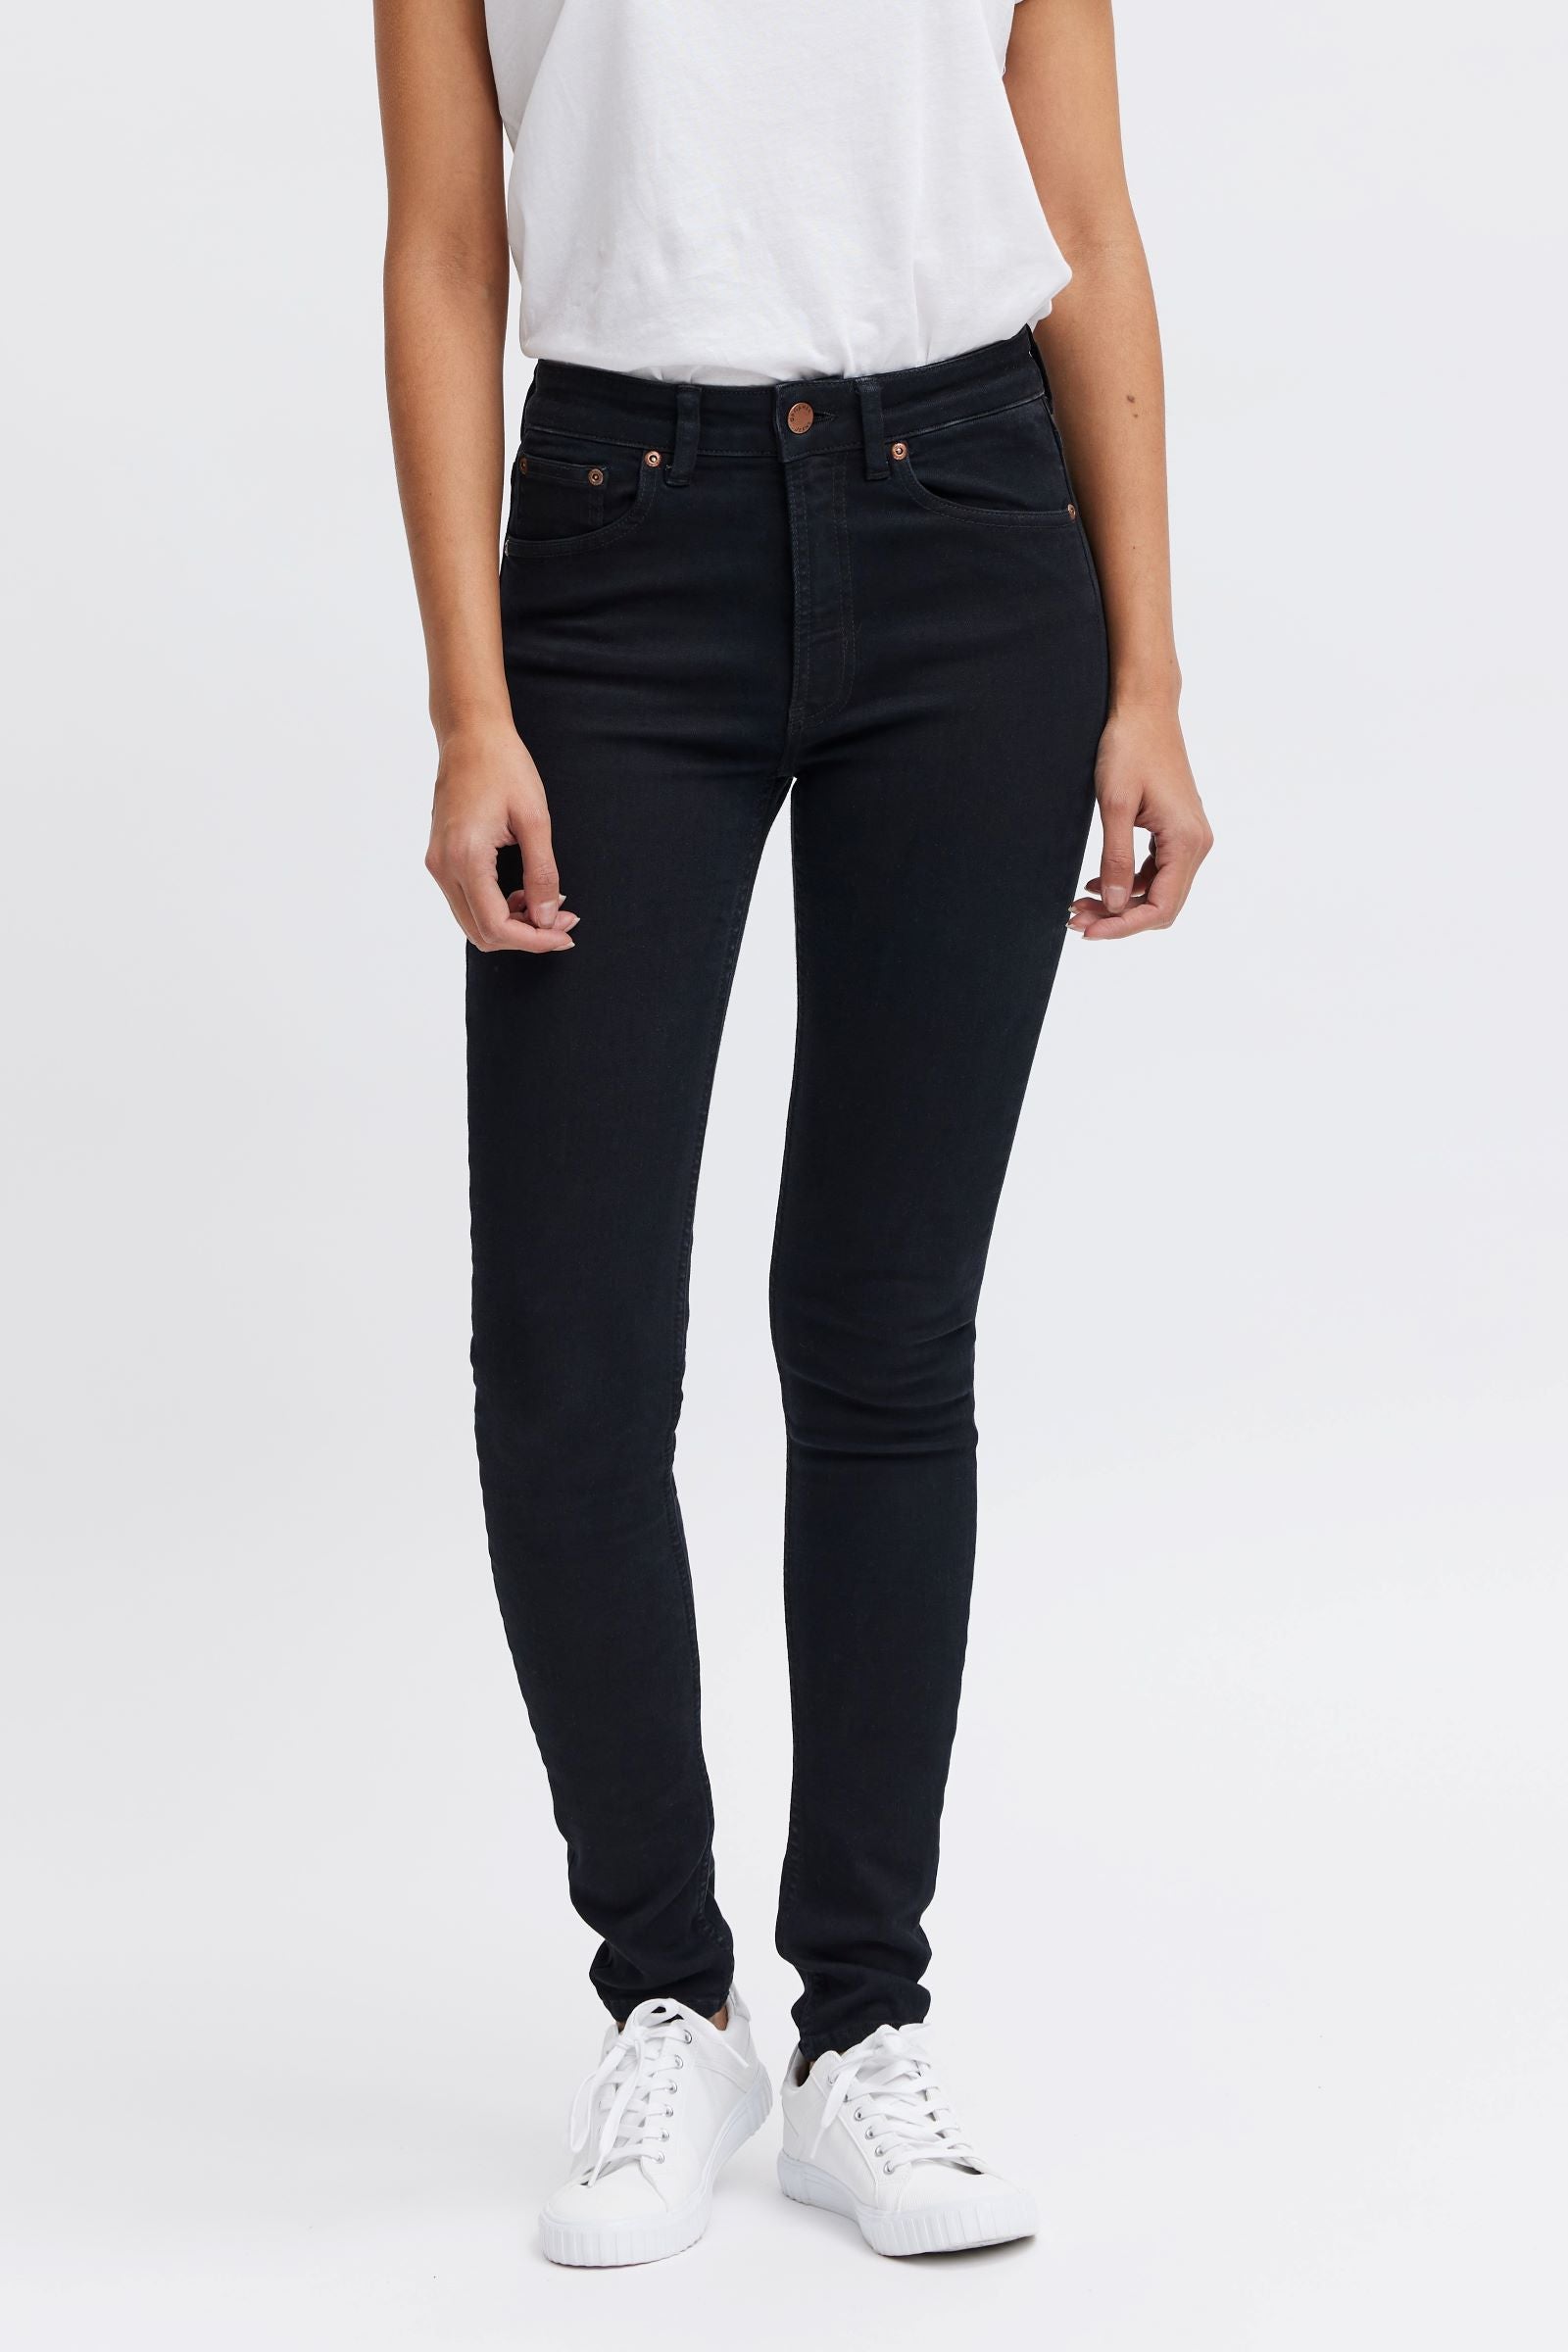 Best Jeans for Women | Straight Leg, Skinny, Wide Leg & Flare Fit ...